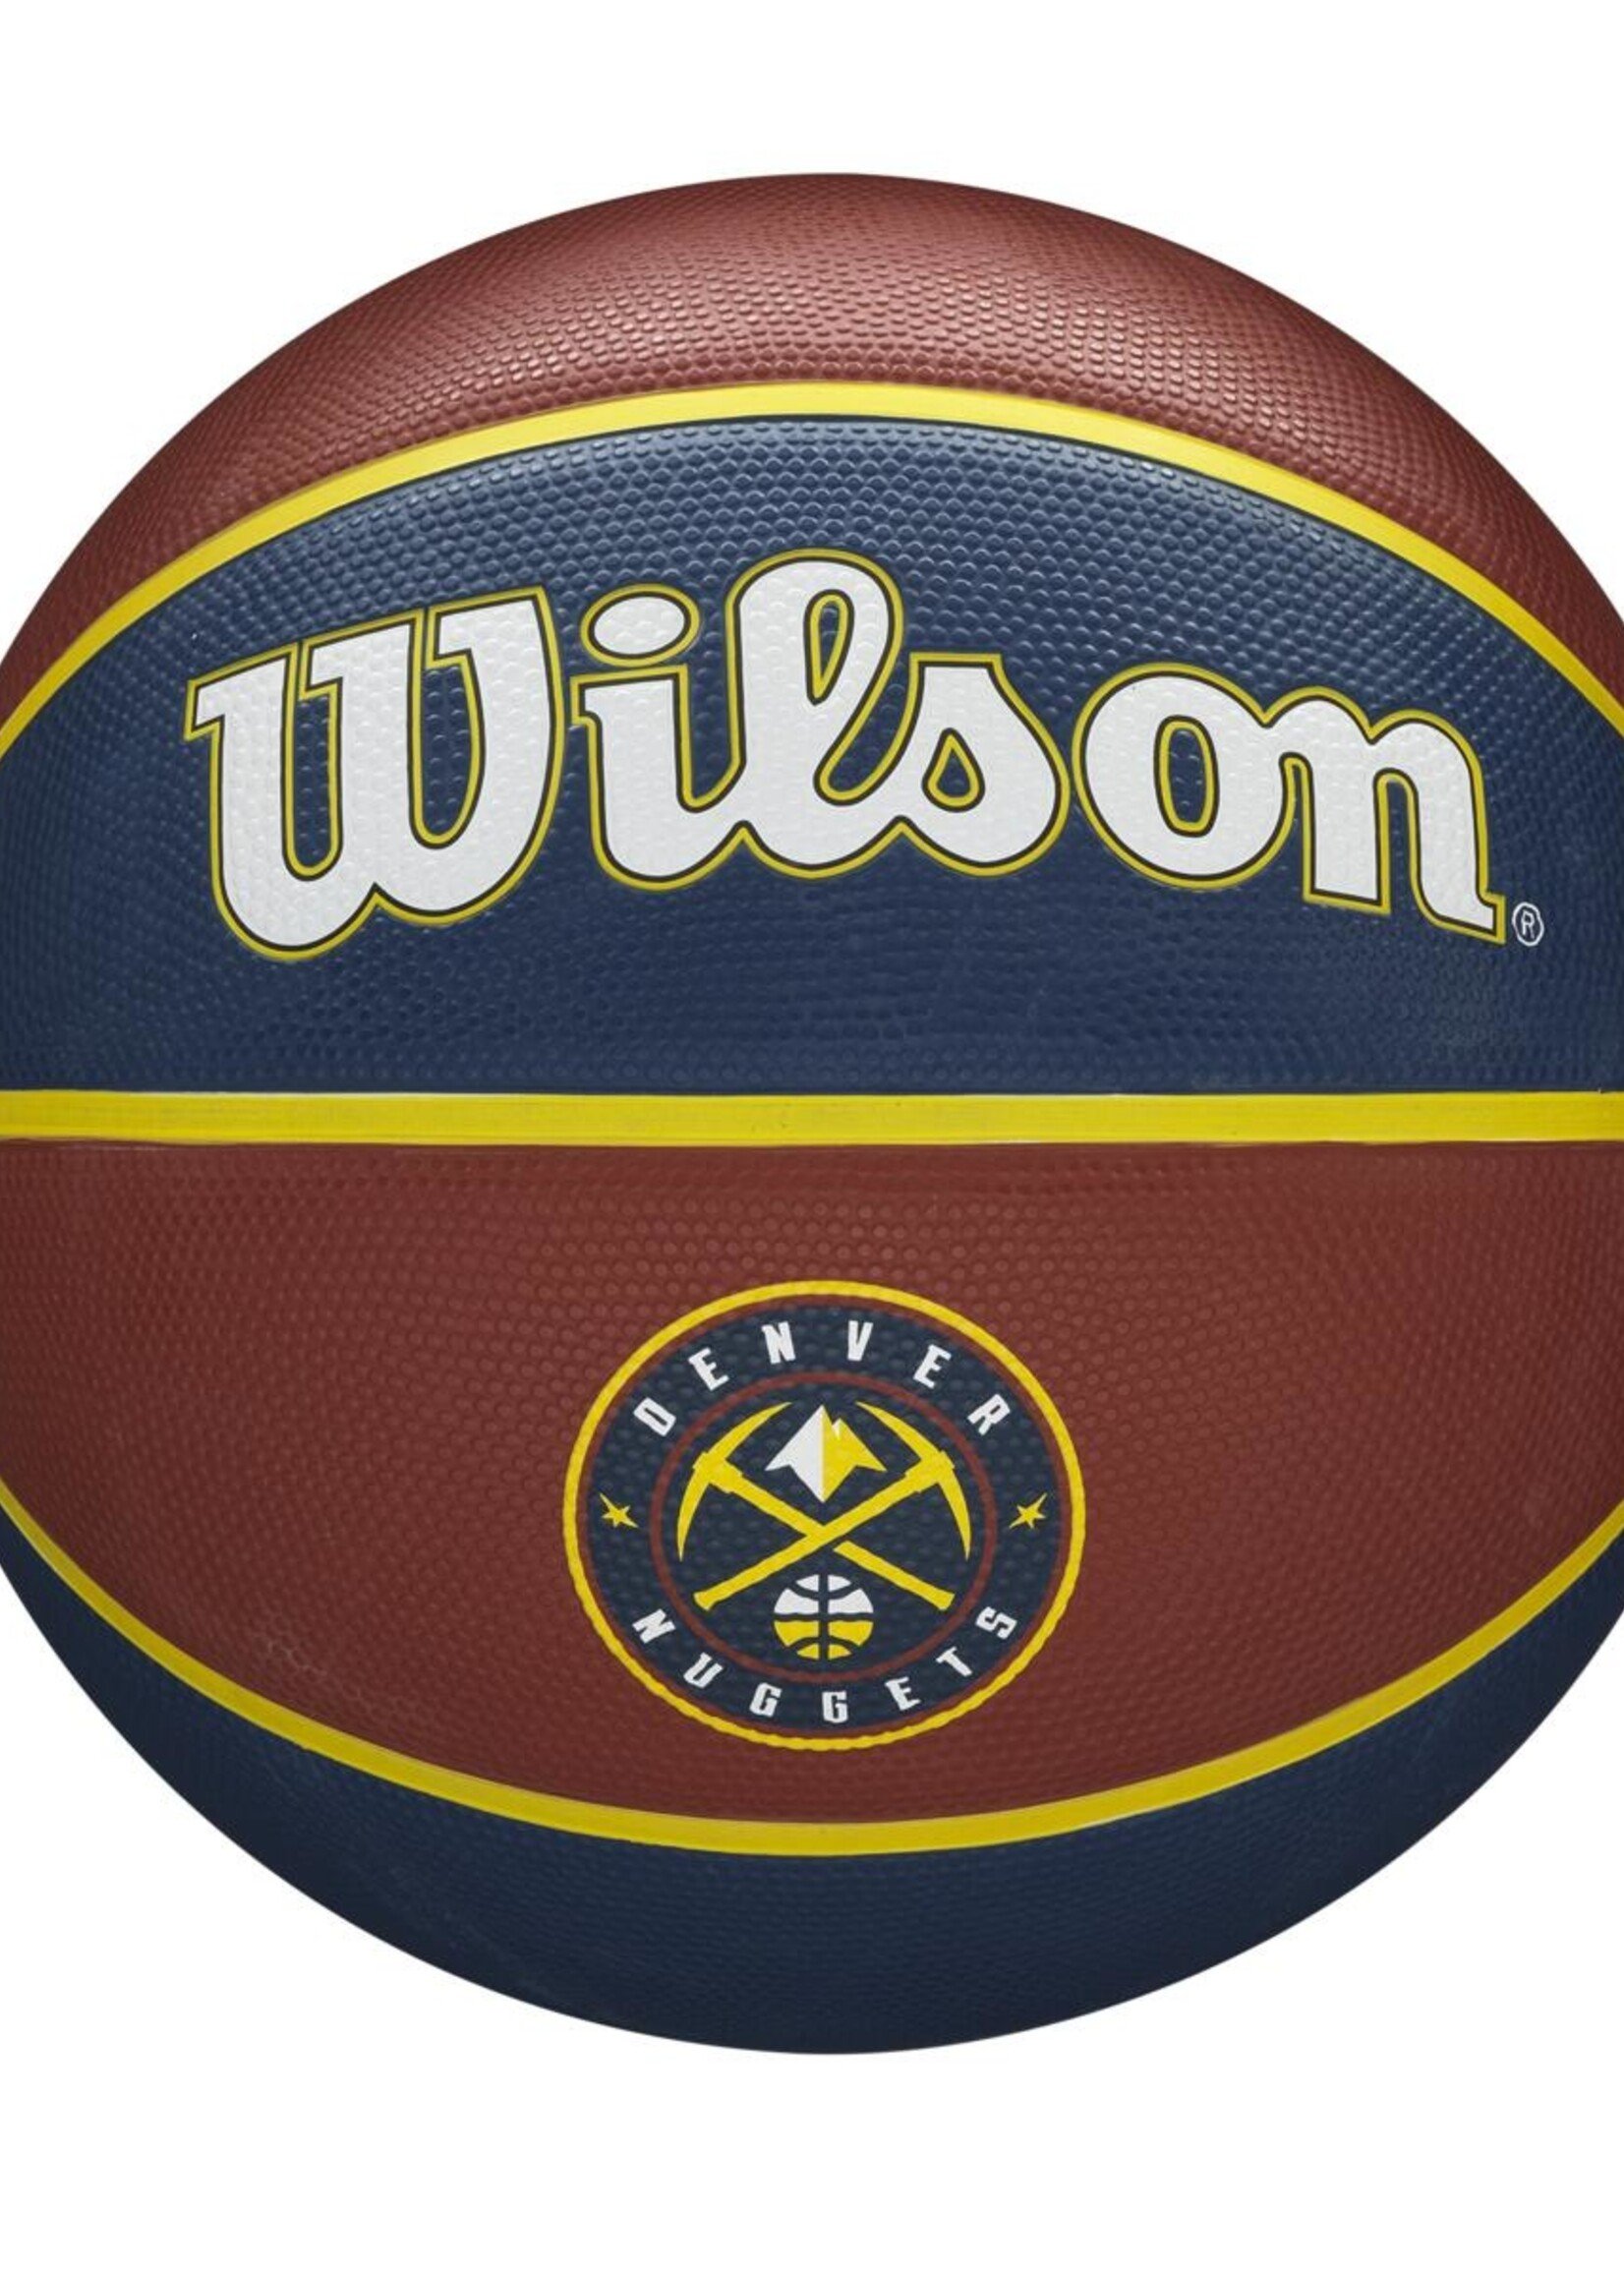 Wilson Wilson NBA DENVER NUGGETS Tribute basketbal (7)